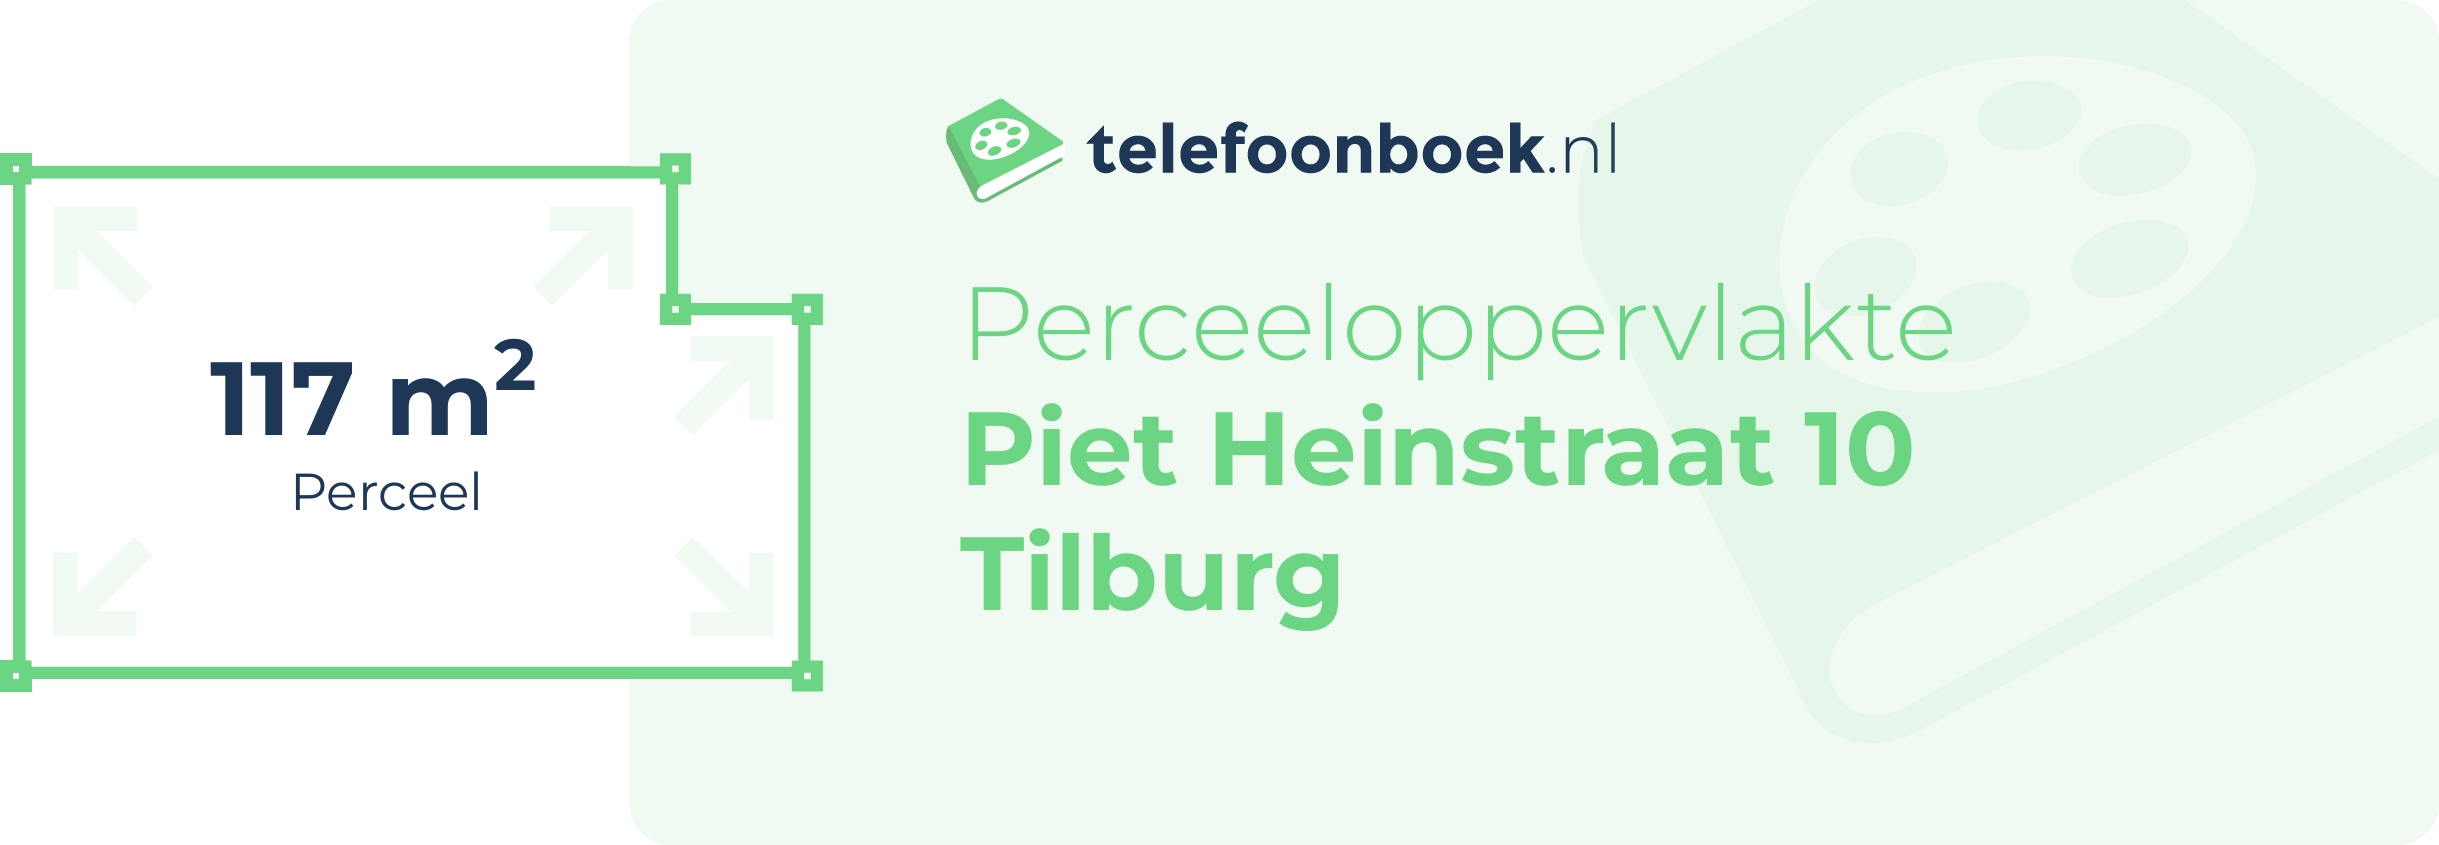 Perceeloppervlakte Piet Heinstraat 10 Tilburg